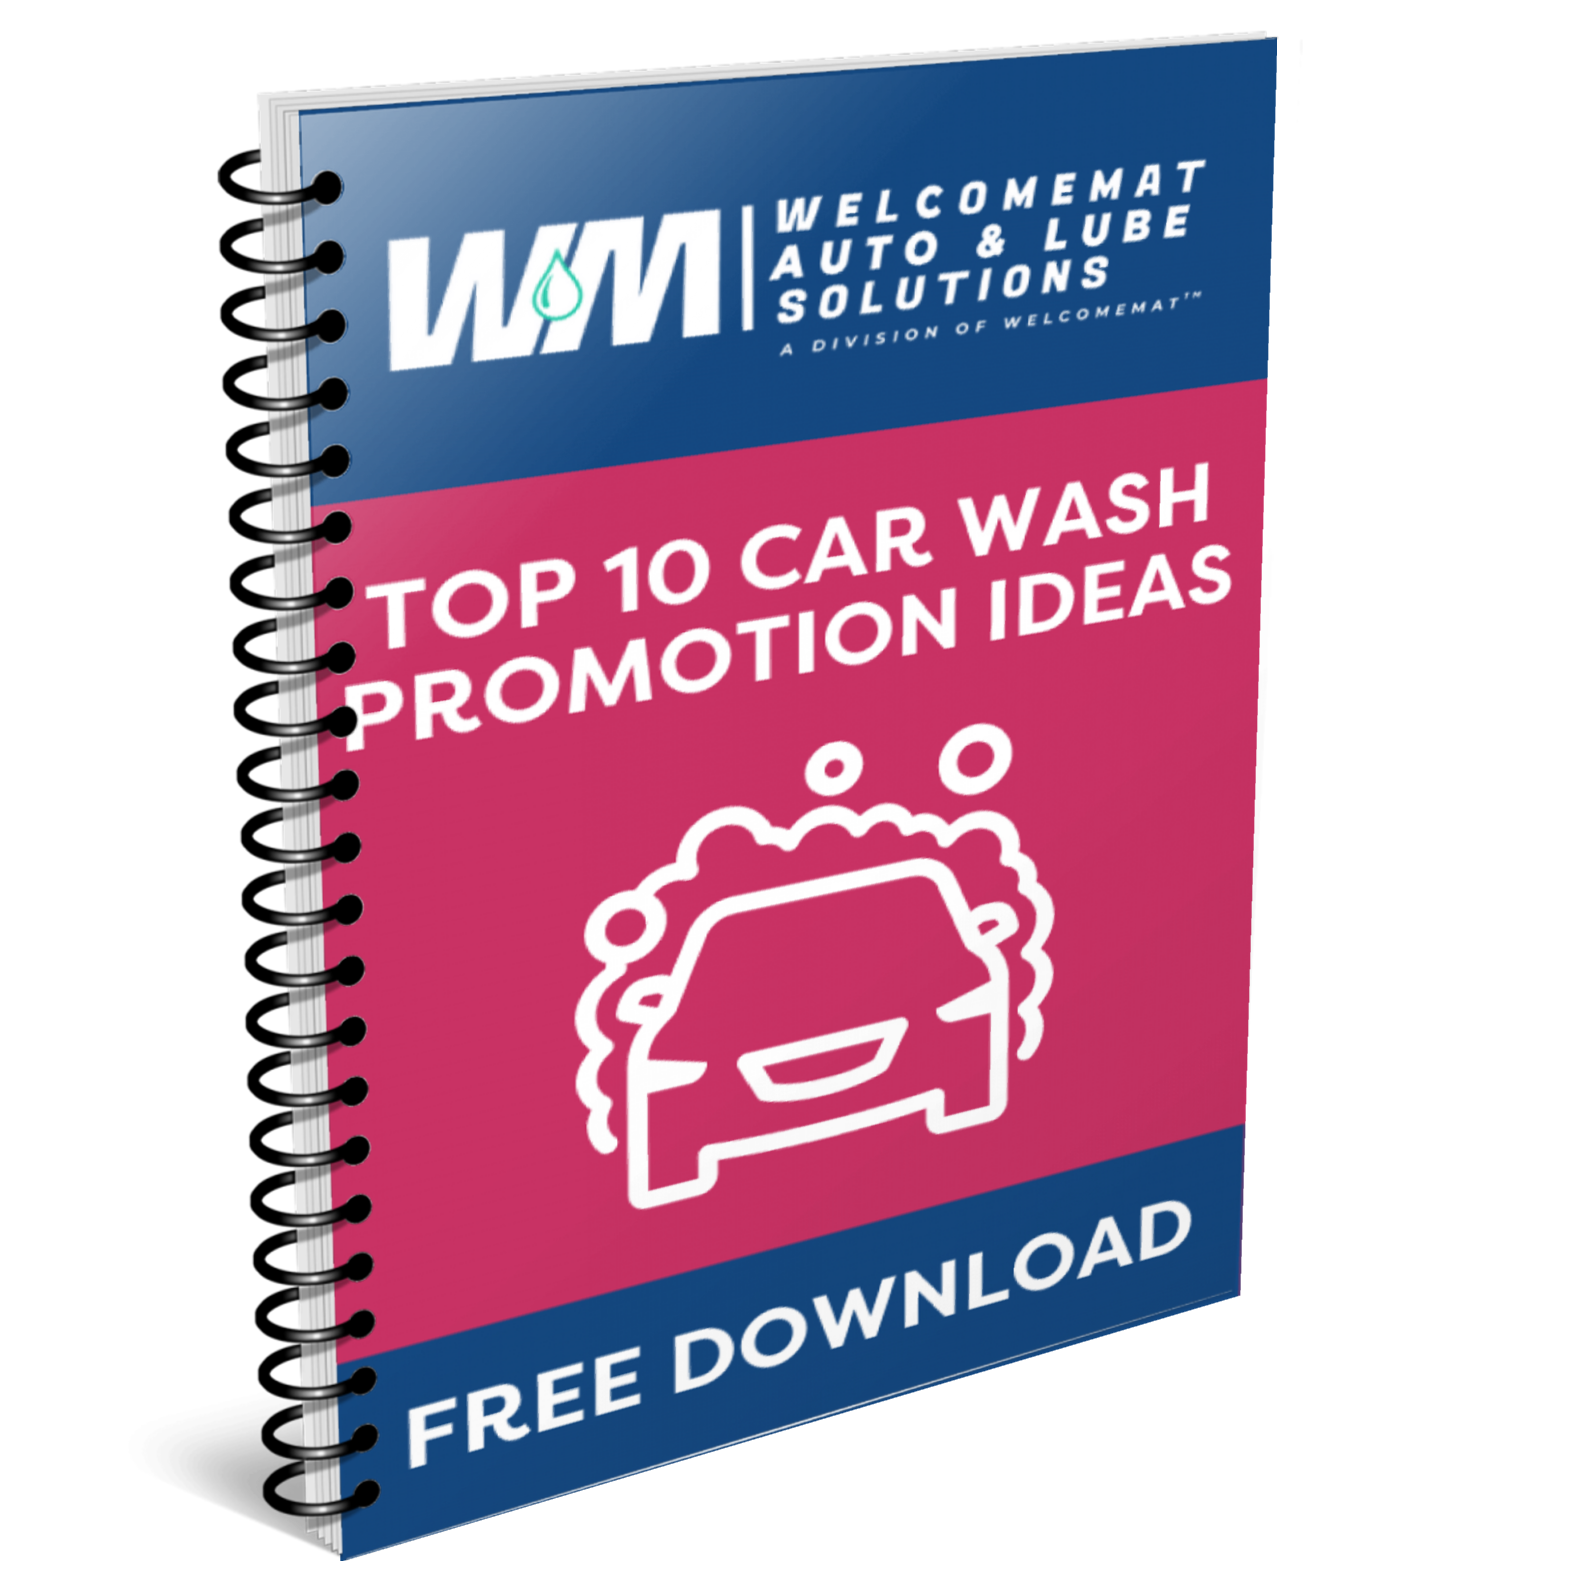 Car Wash Promotion Ideas - Ebook - Welcomemat